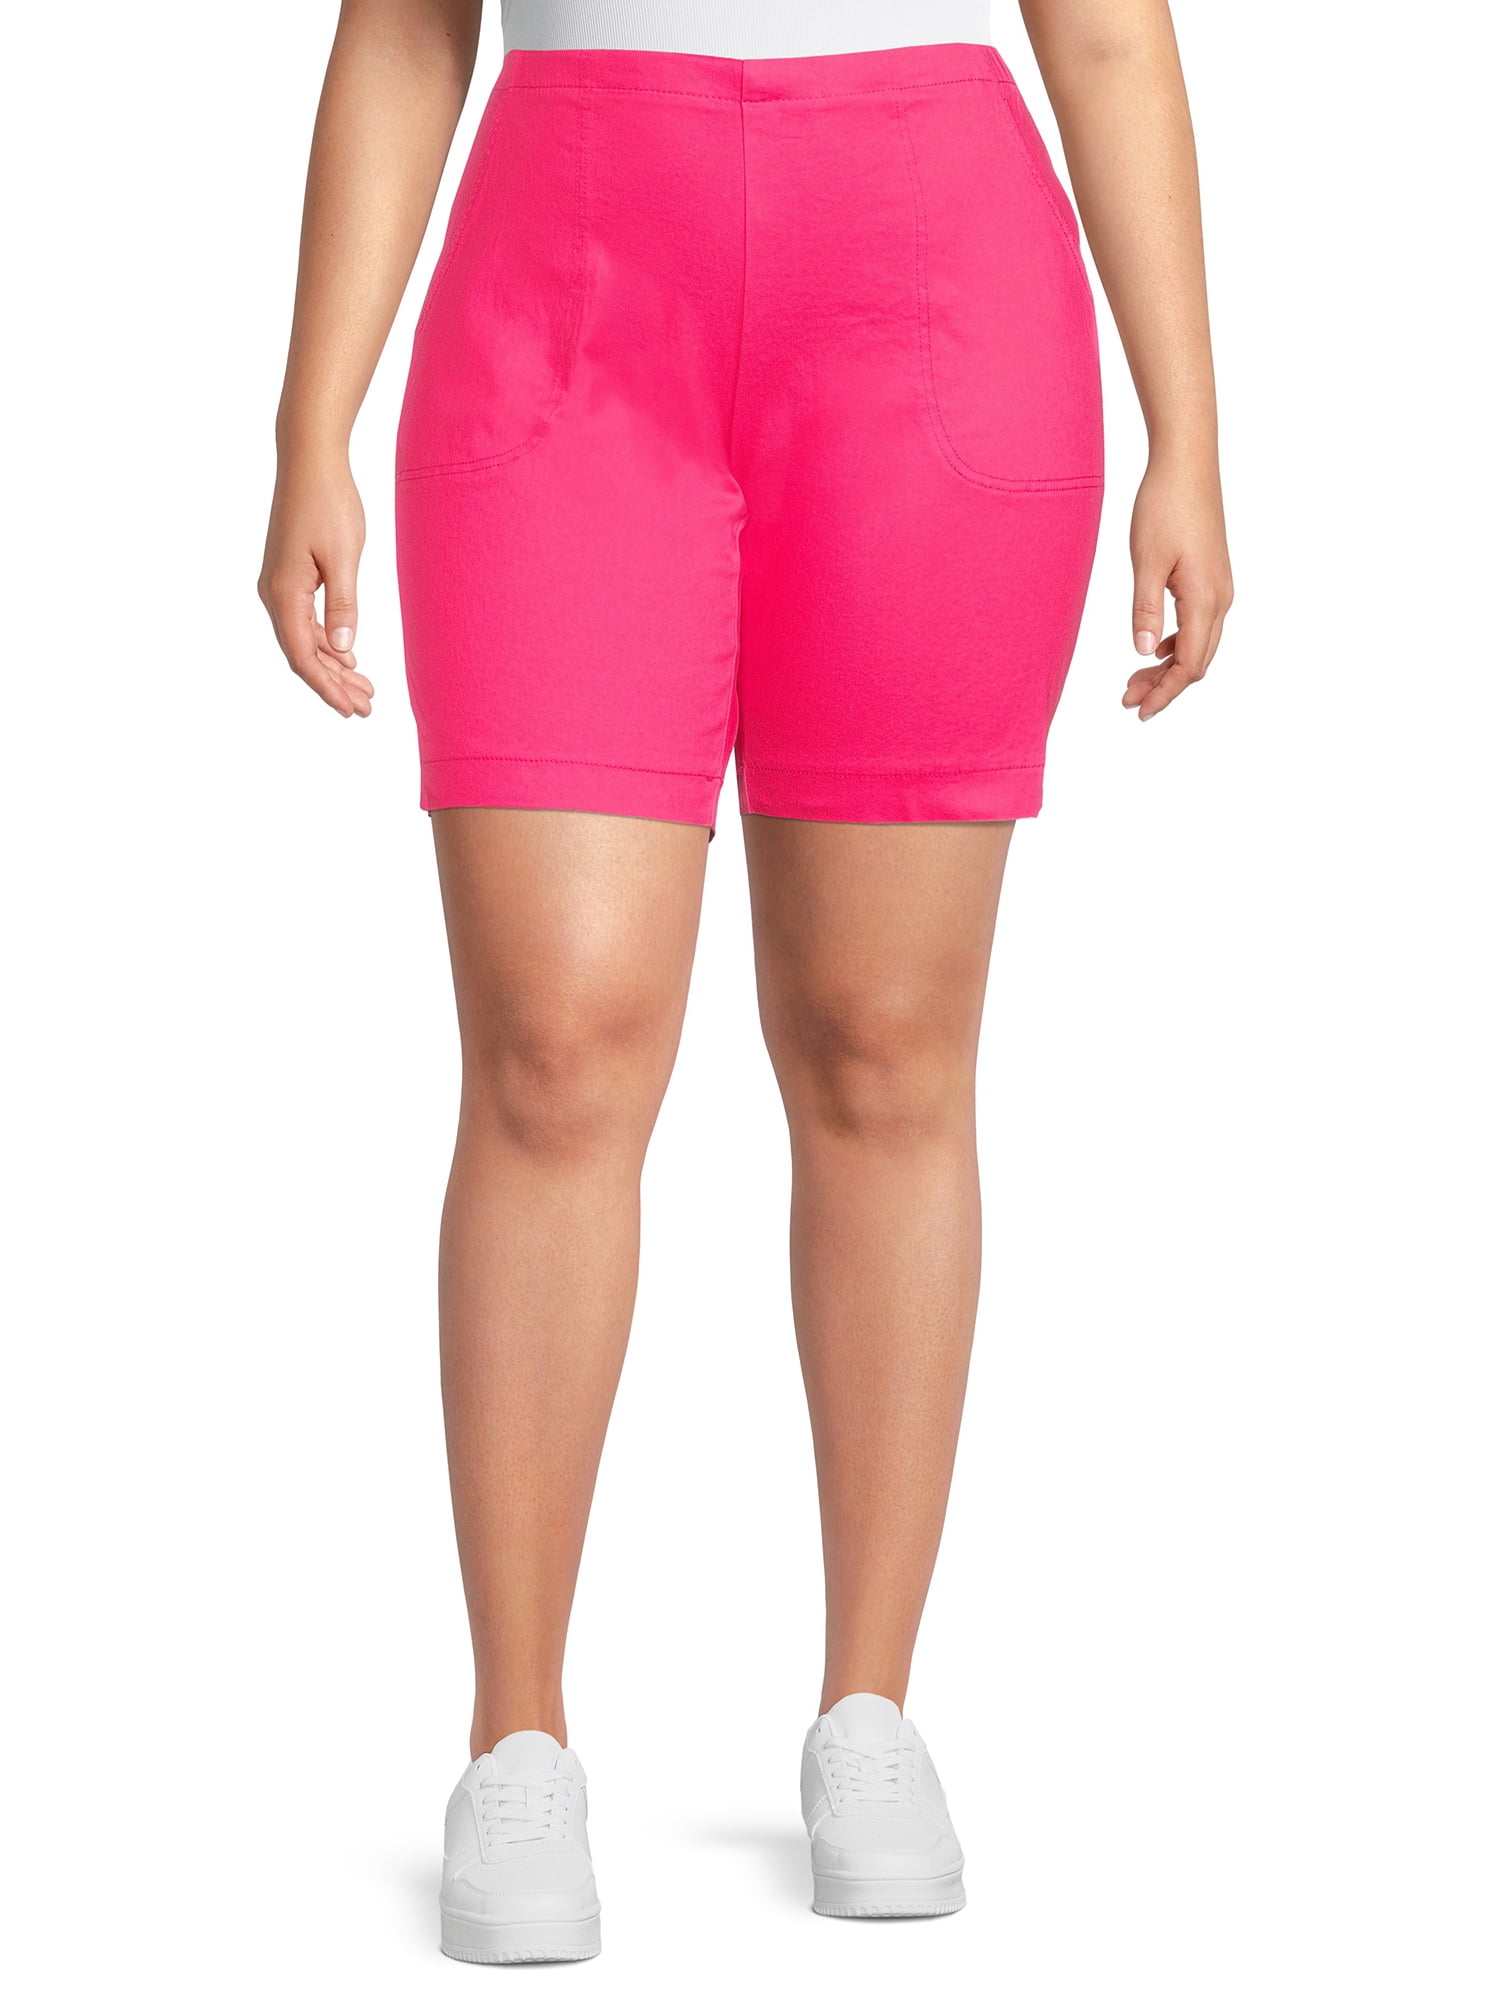 Just My Size Women's Size Shorts Walmart.com